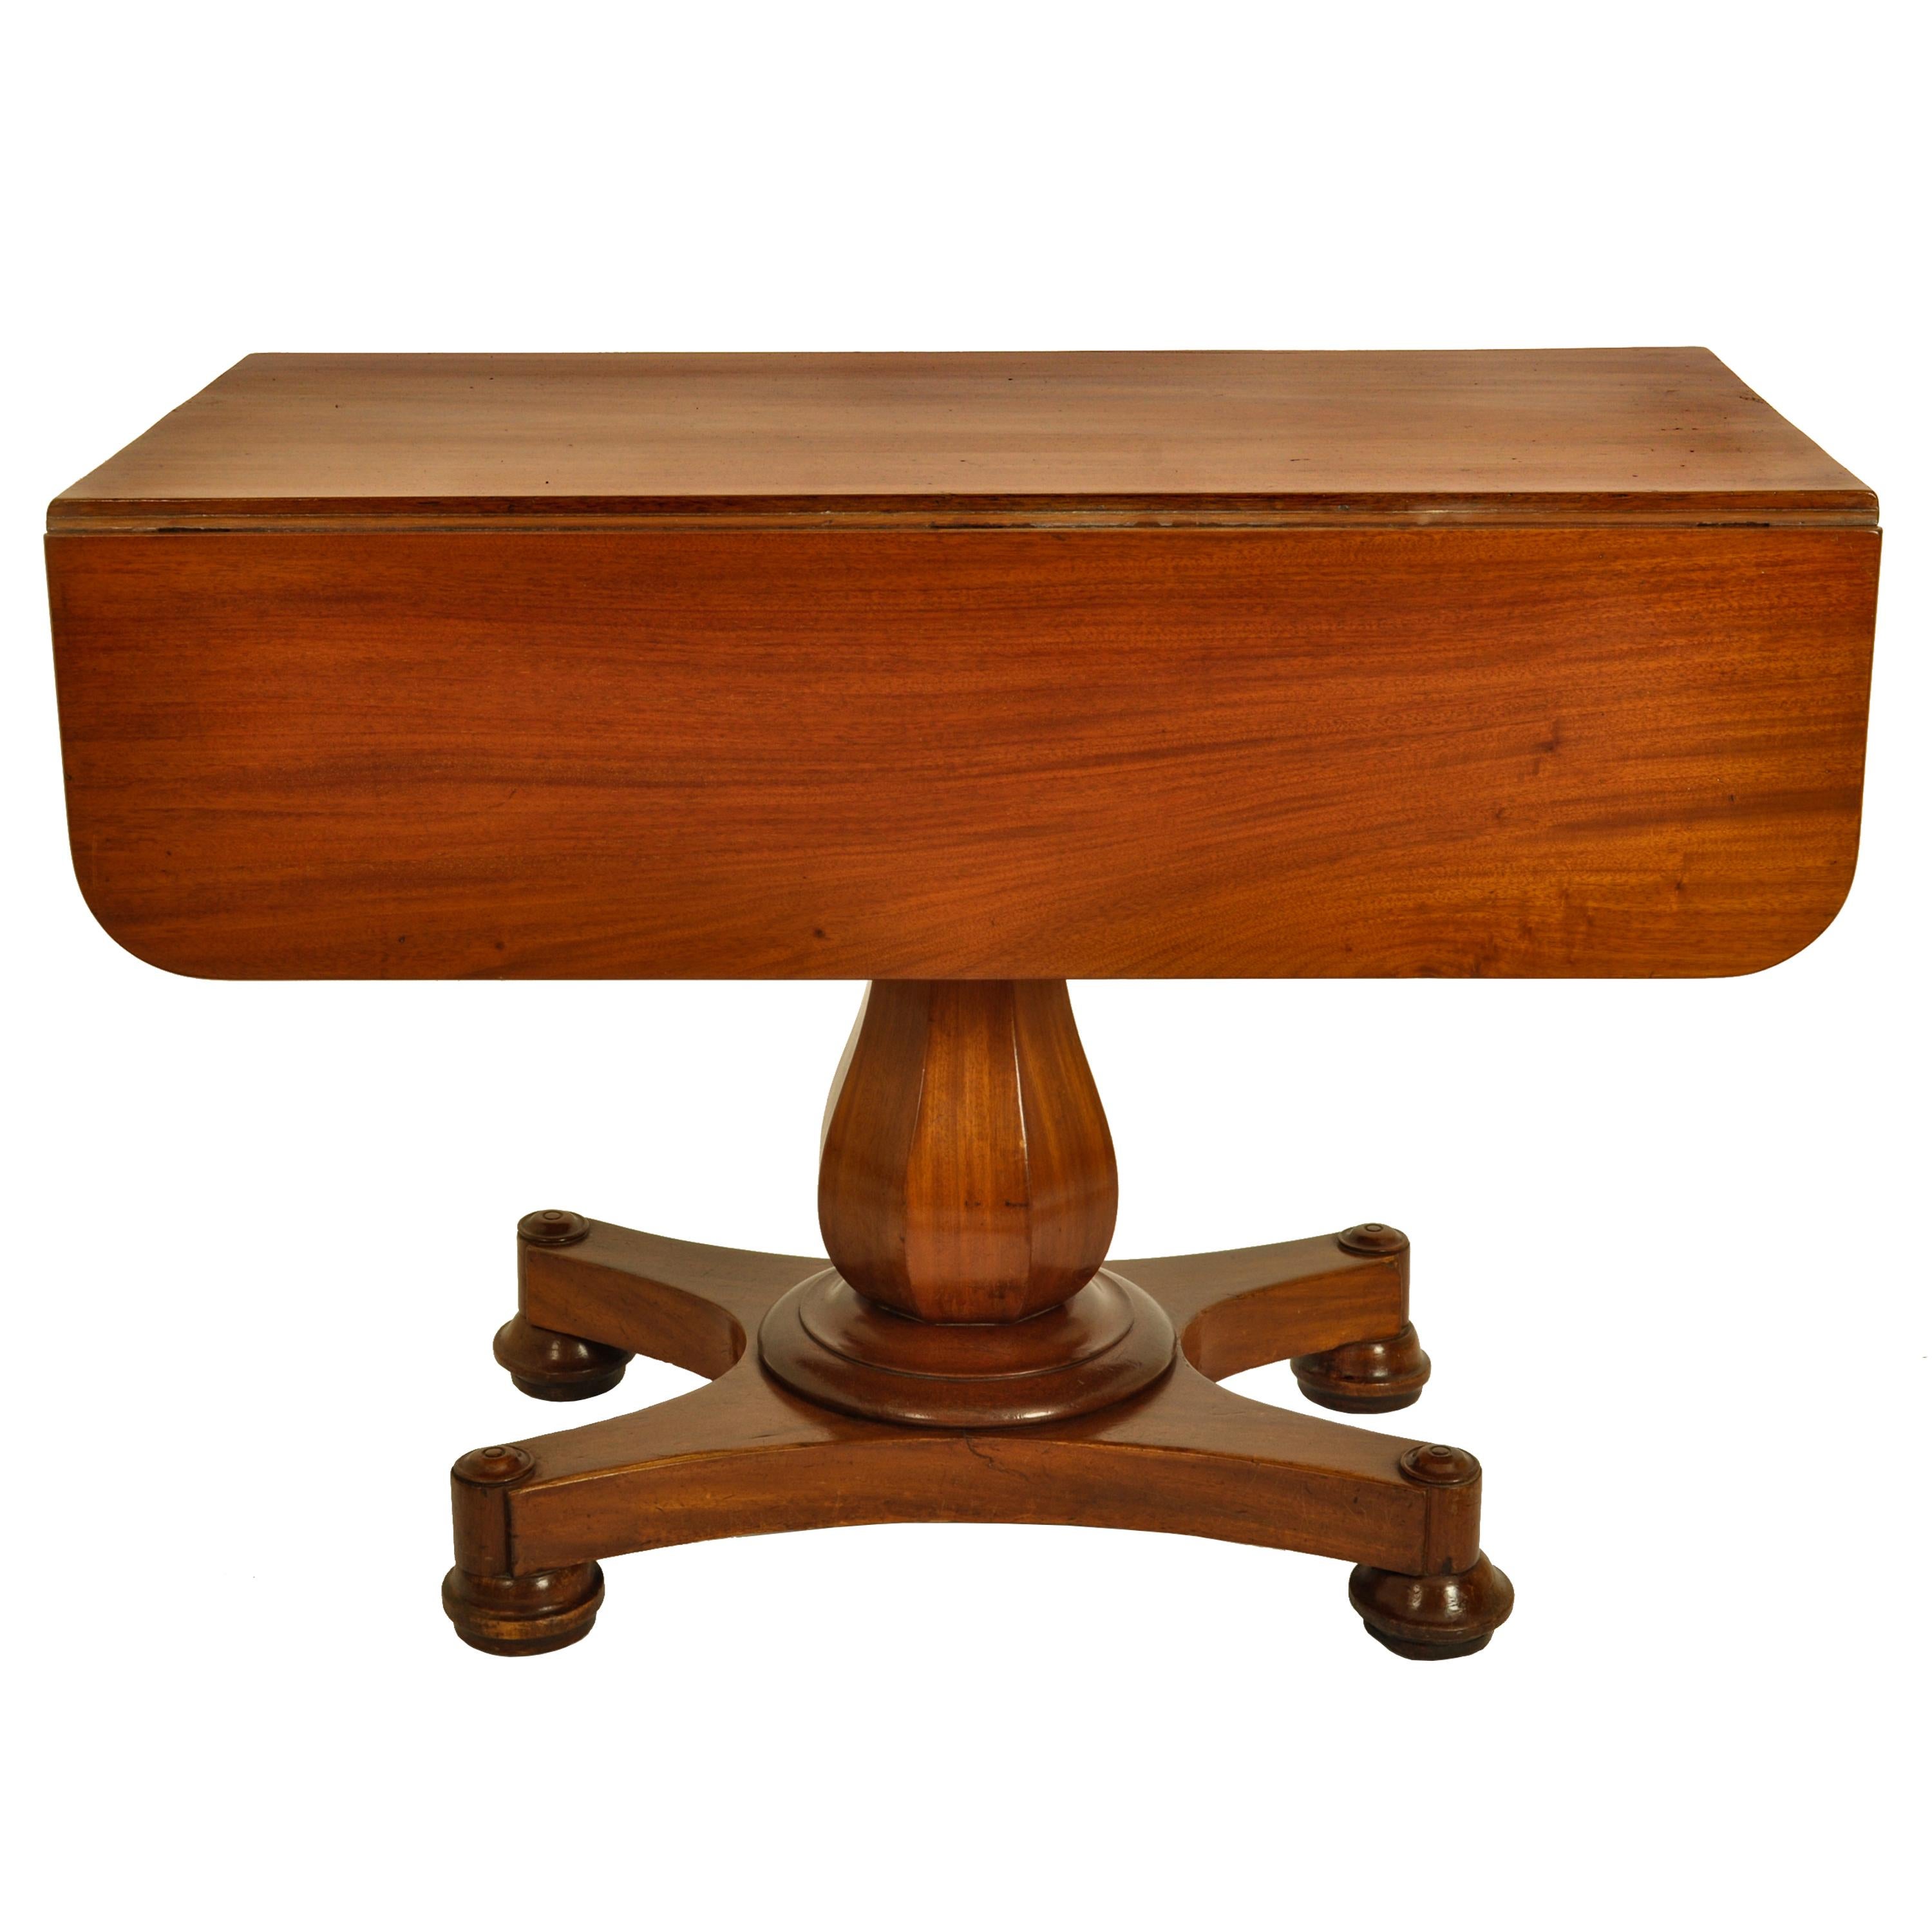 Antique American Empire Mahogany Drop Leaf Pedestal Pembroke Table Maryland 1840 For Sale 2